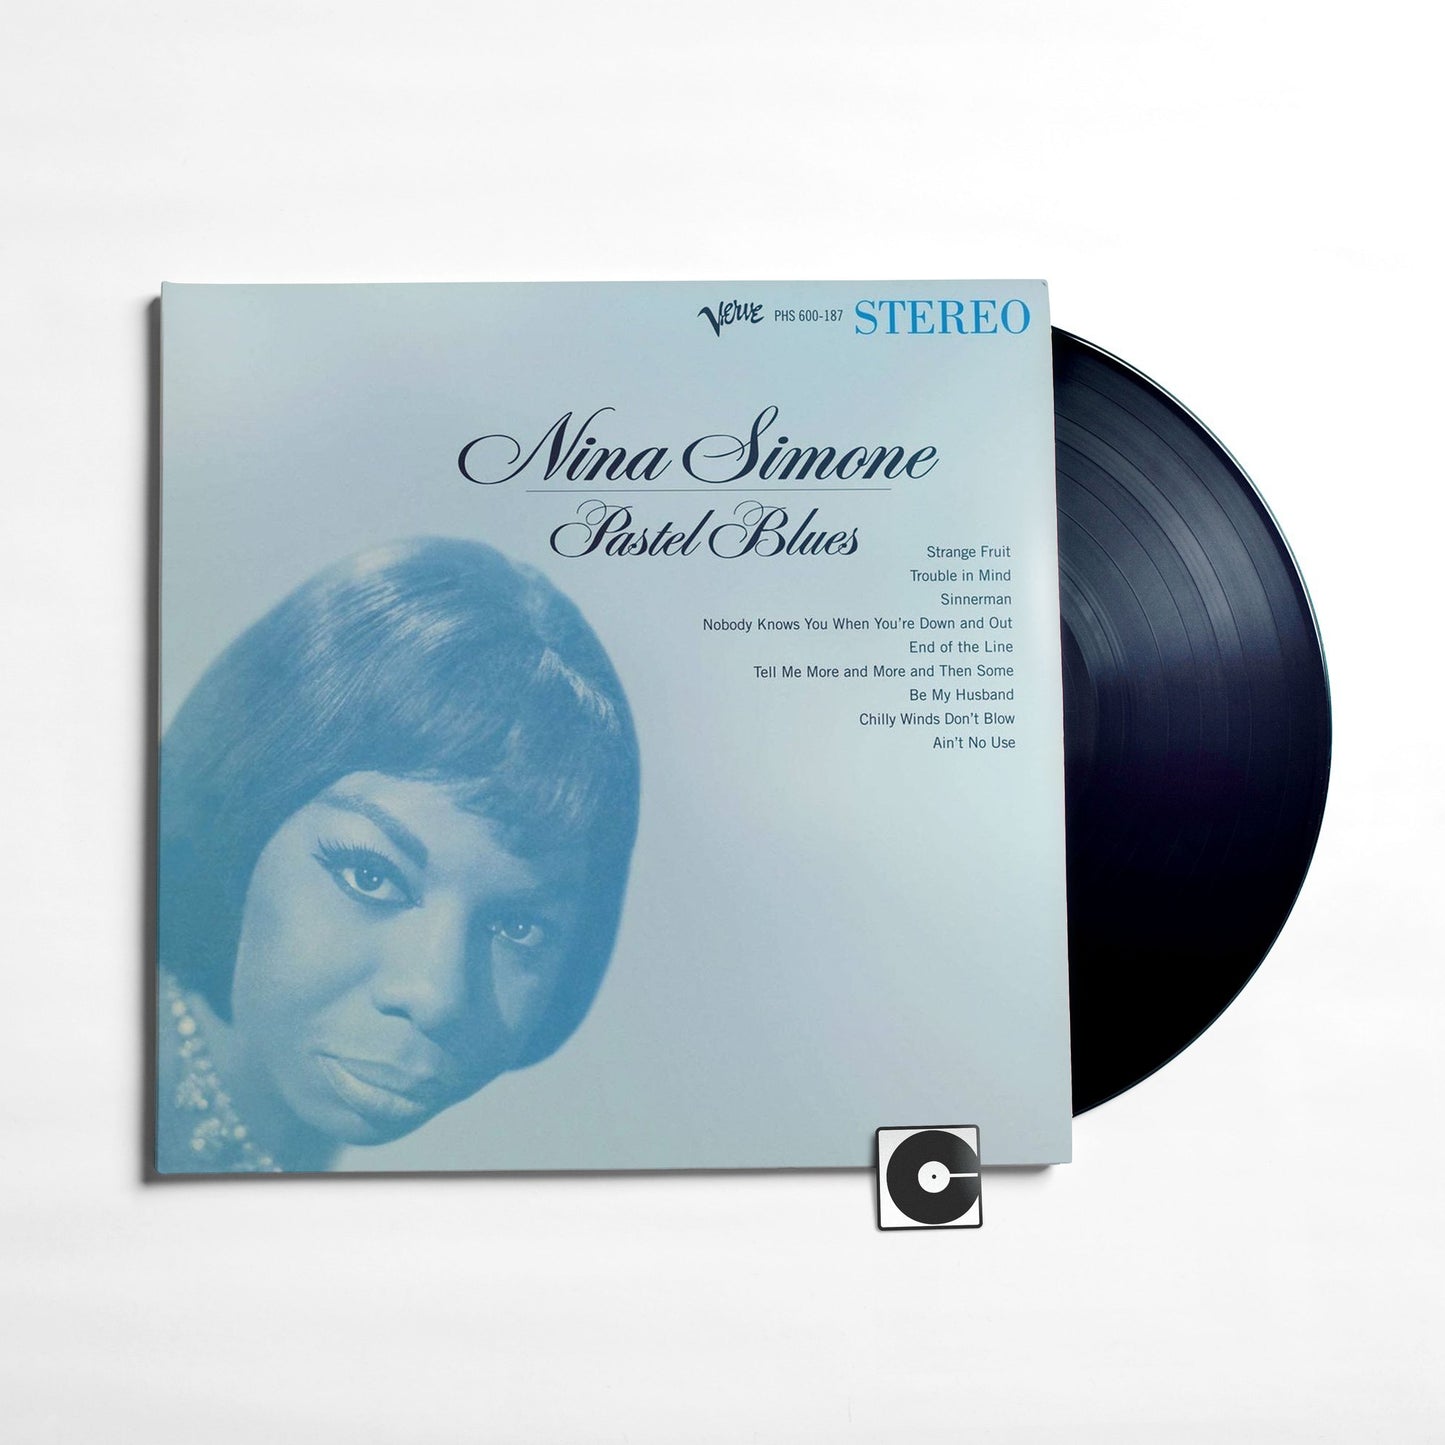 Nina Simone - "Pastel Blues"